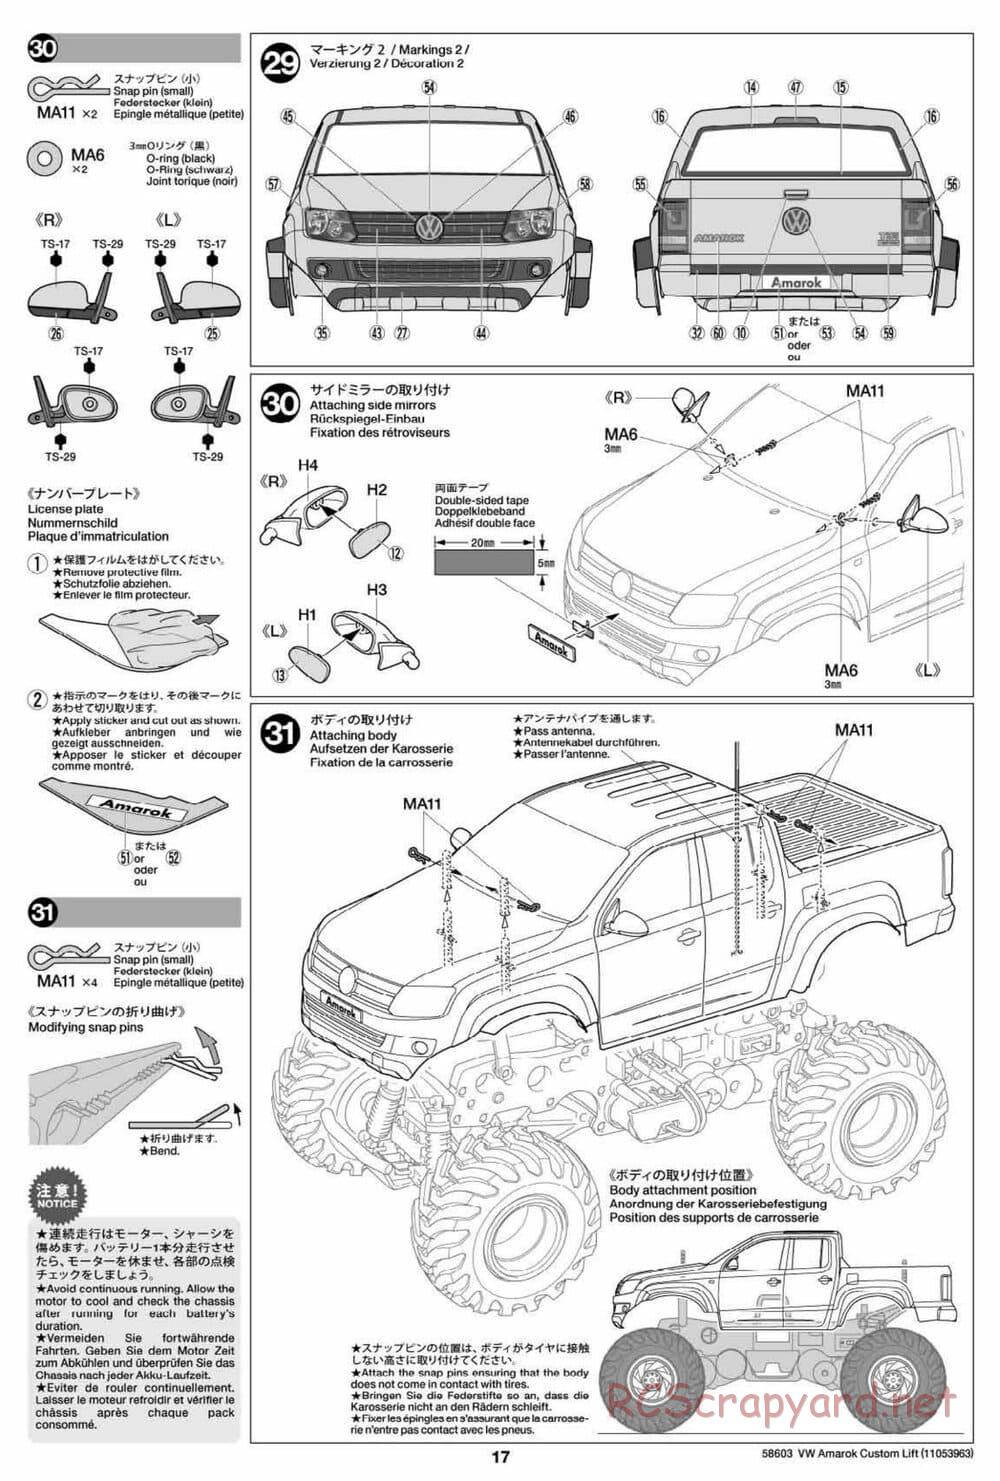 Tamiya - Volkswagen Amarok Custom Lift - WT-01N Chassis - Manual - Page 17